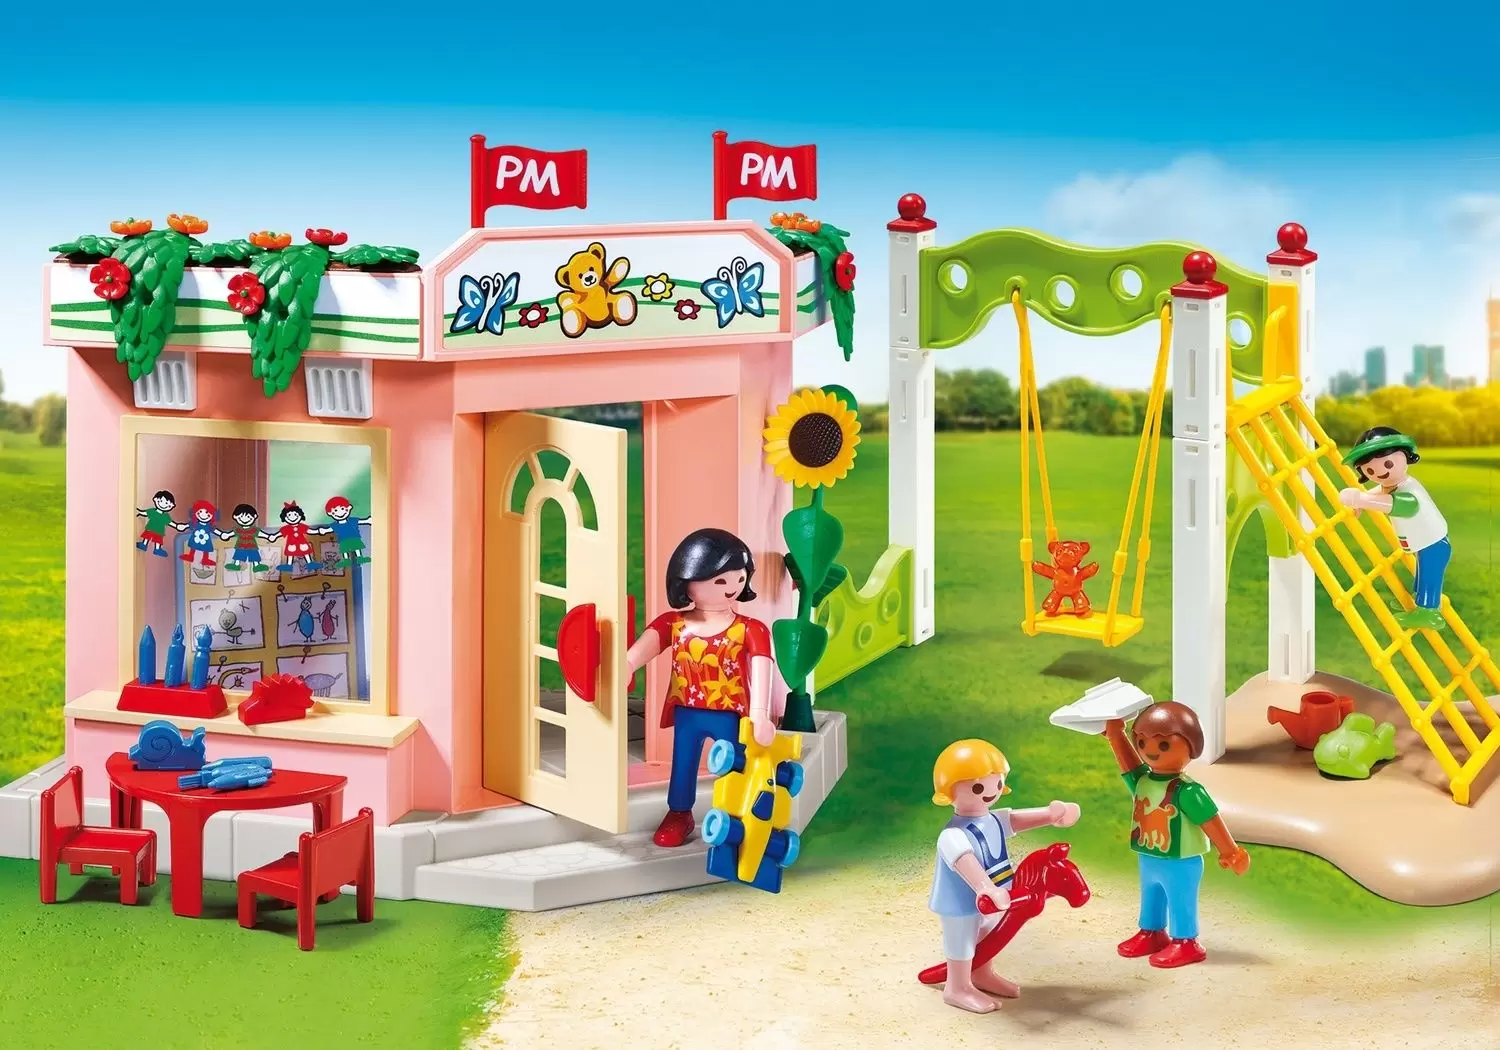 Playmobil® - Centre de loisirs - 70280 - Playmobil® City Life